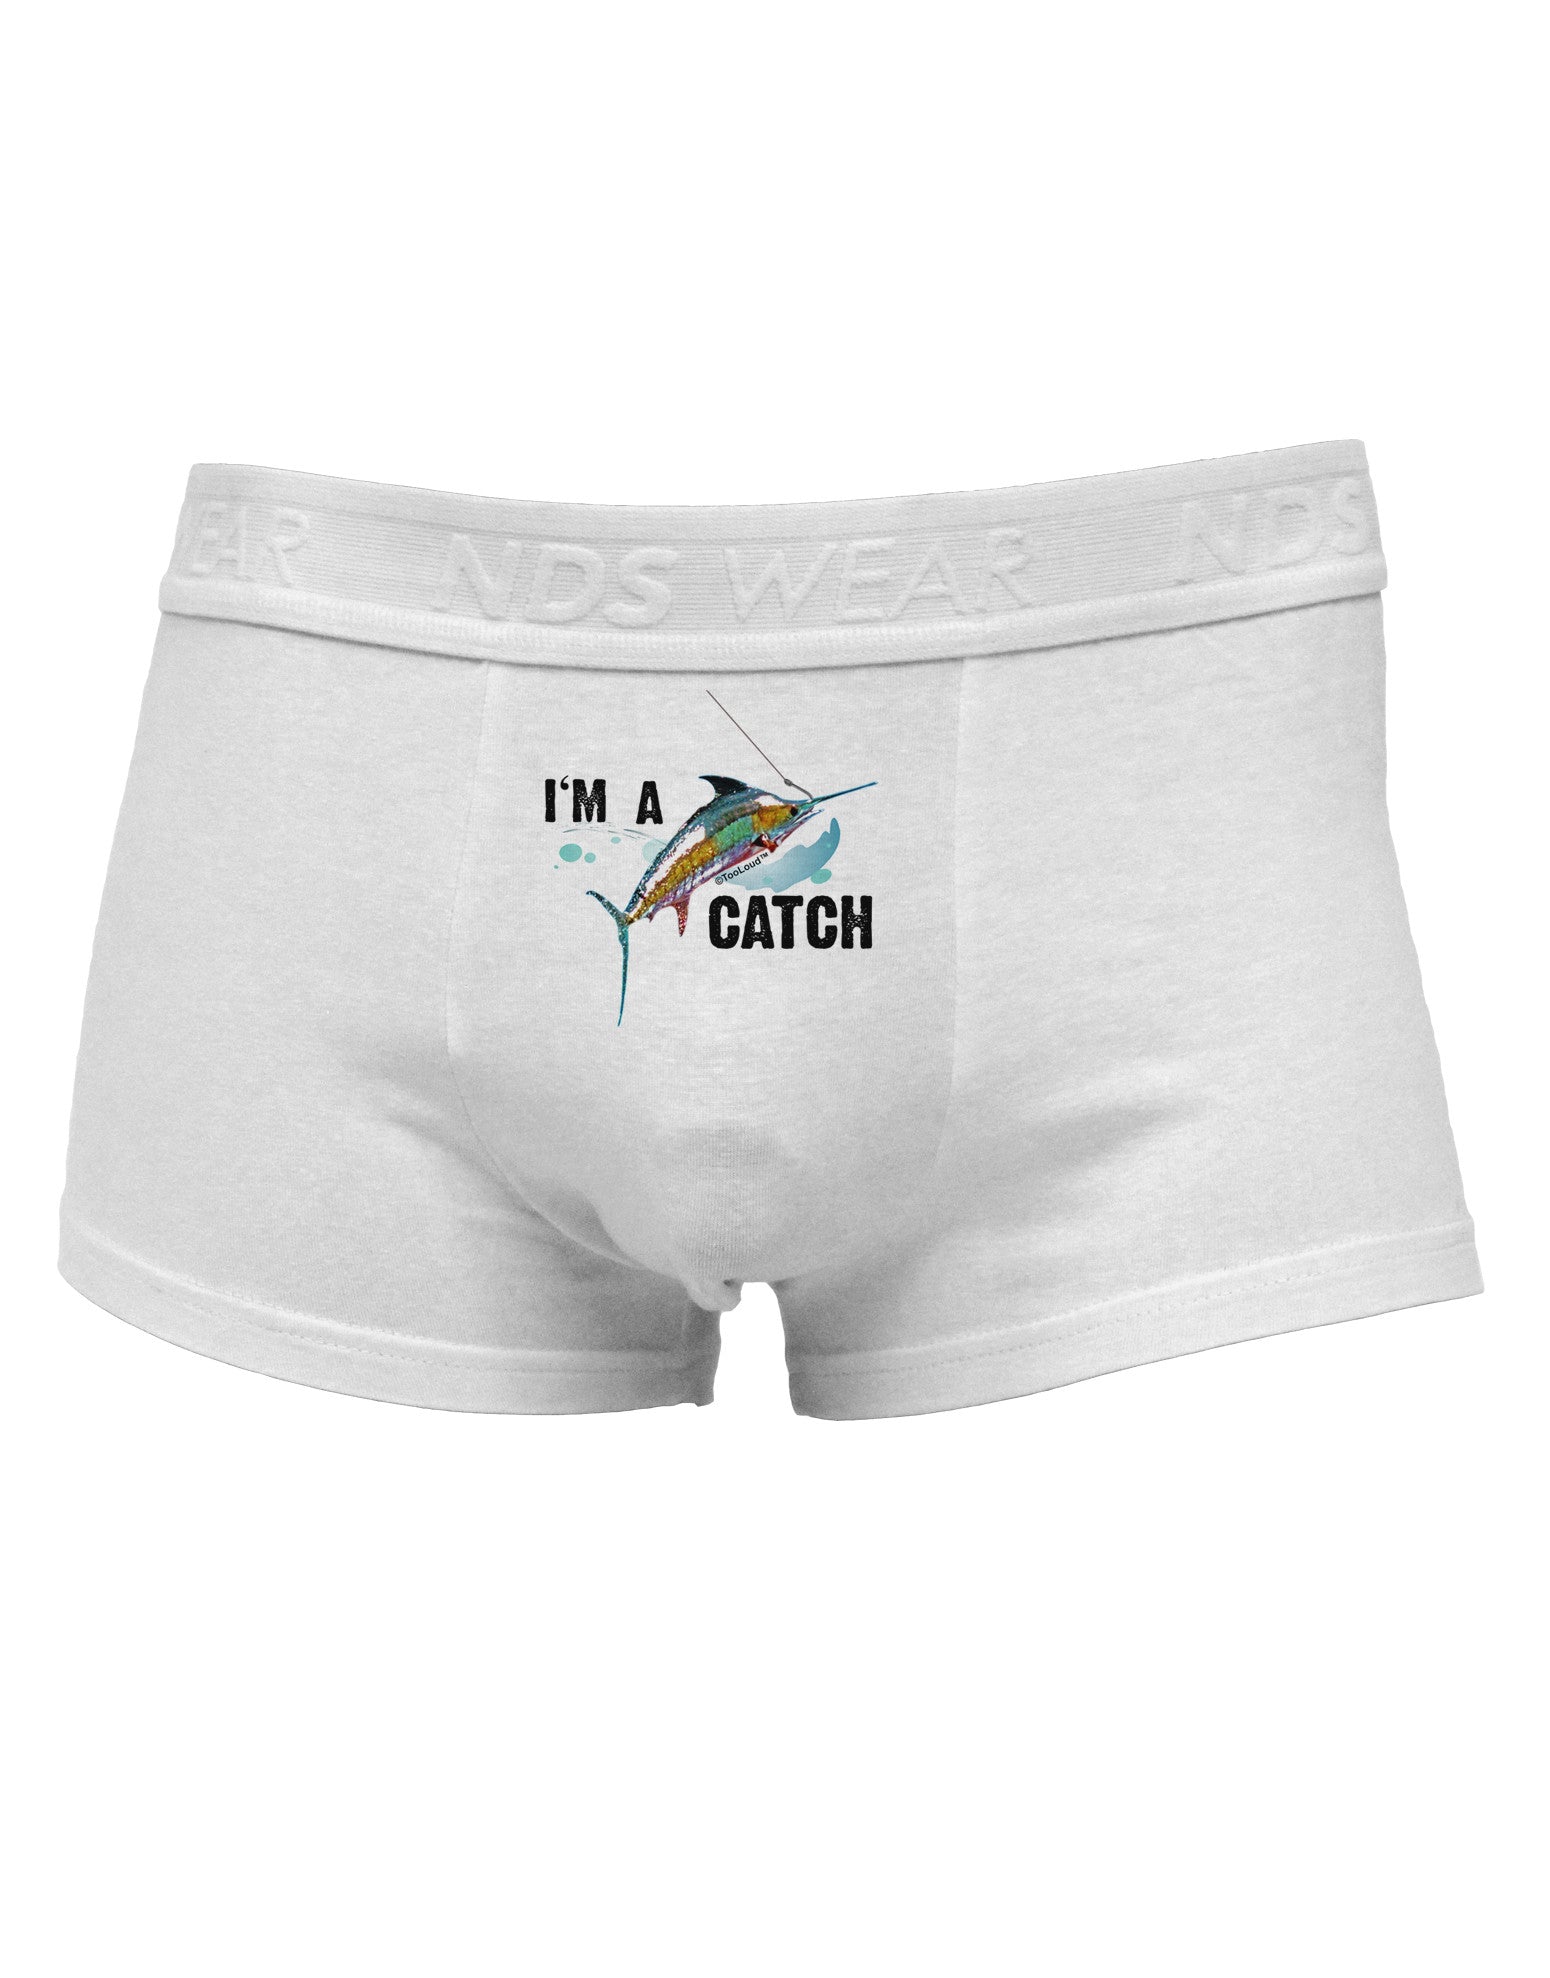 I'm A Catch Swordfish Mens Cotton Trunk Underwear White / Medium